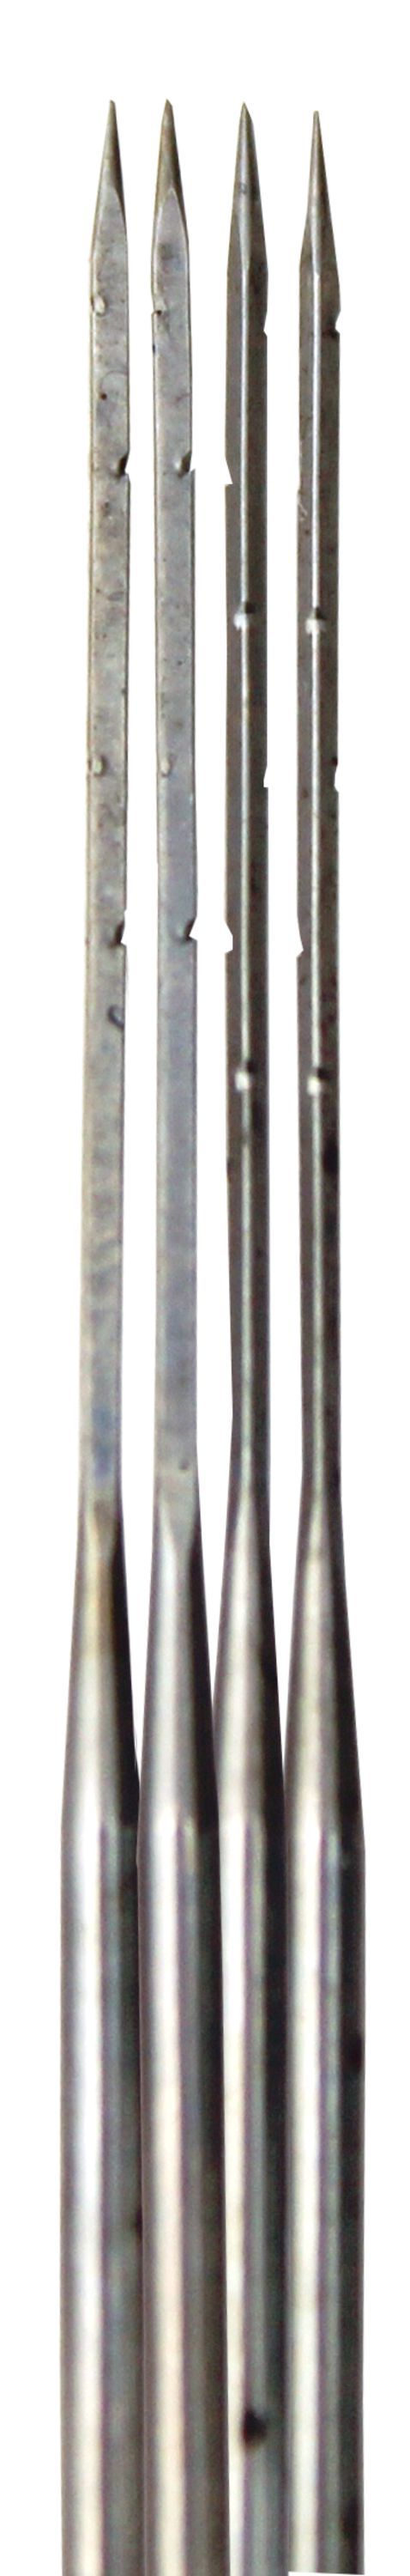 Felting Equipment 4  40 gauge Triangular Felting Needles